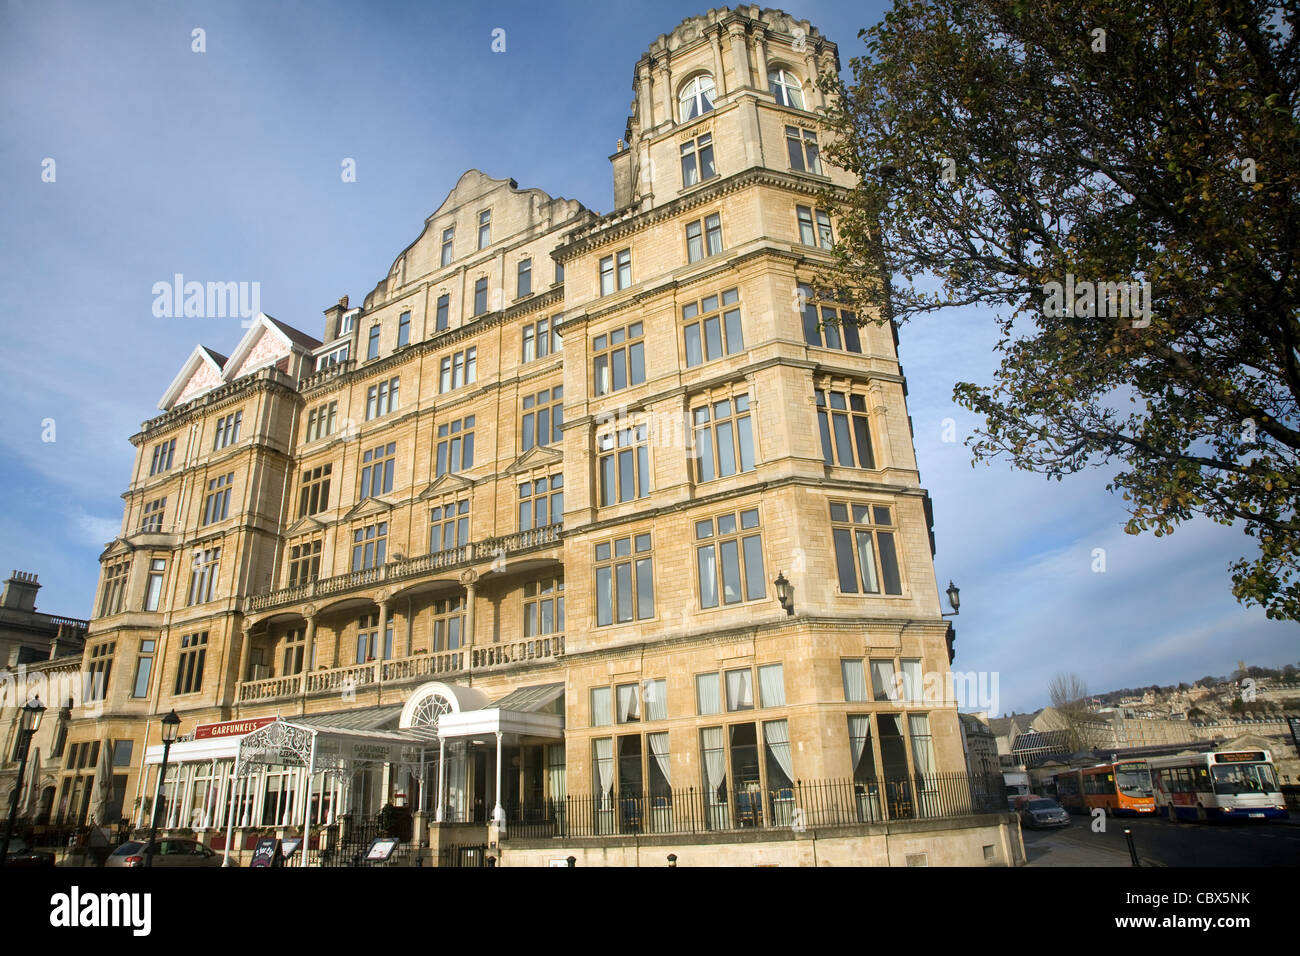 Empire hotel building, Bath, England Stock Photo